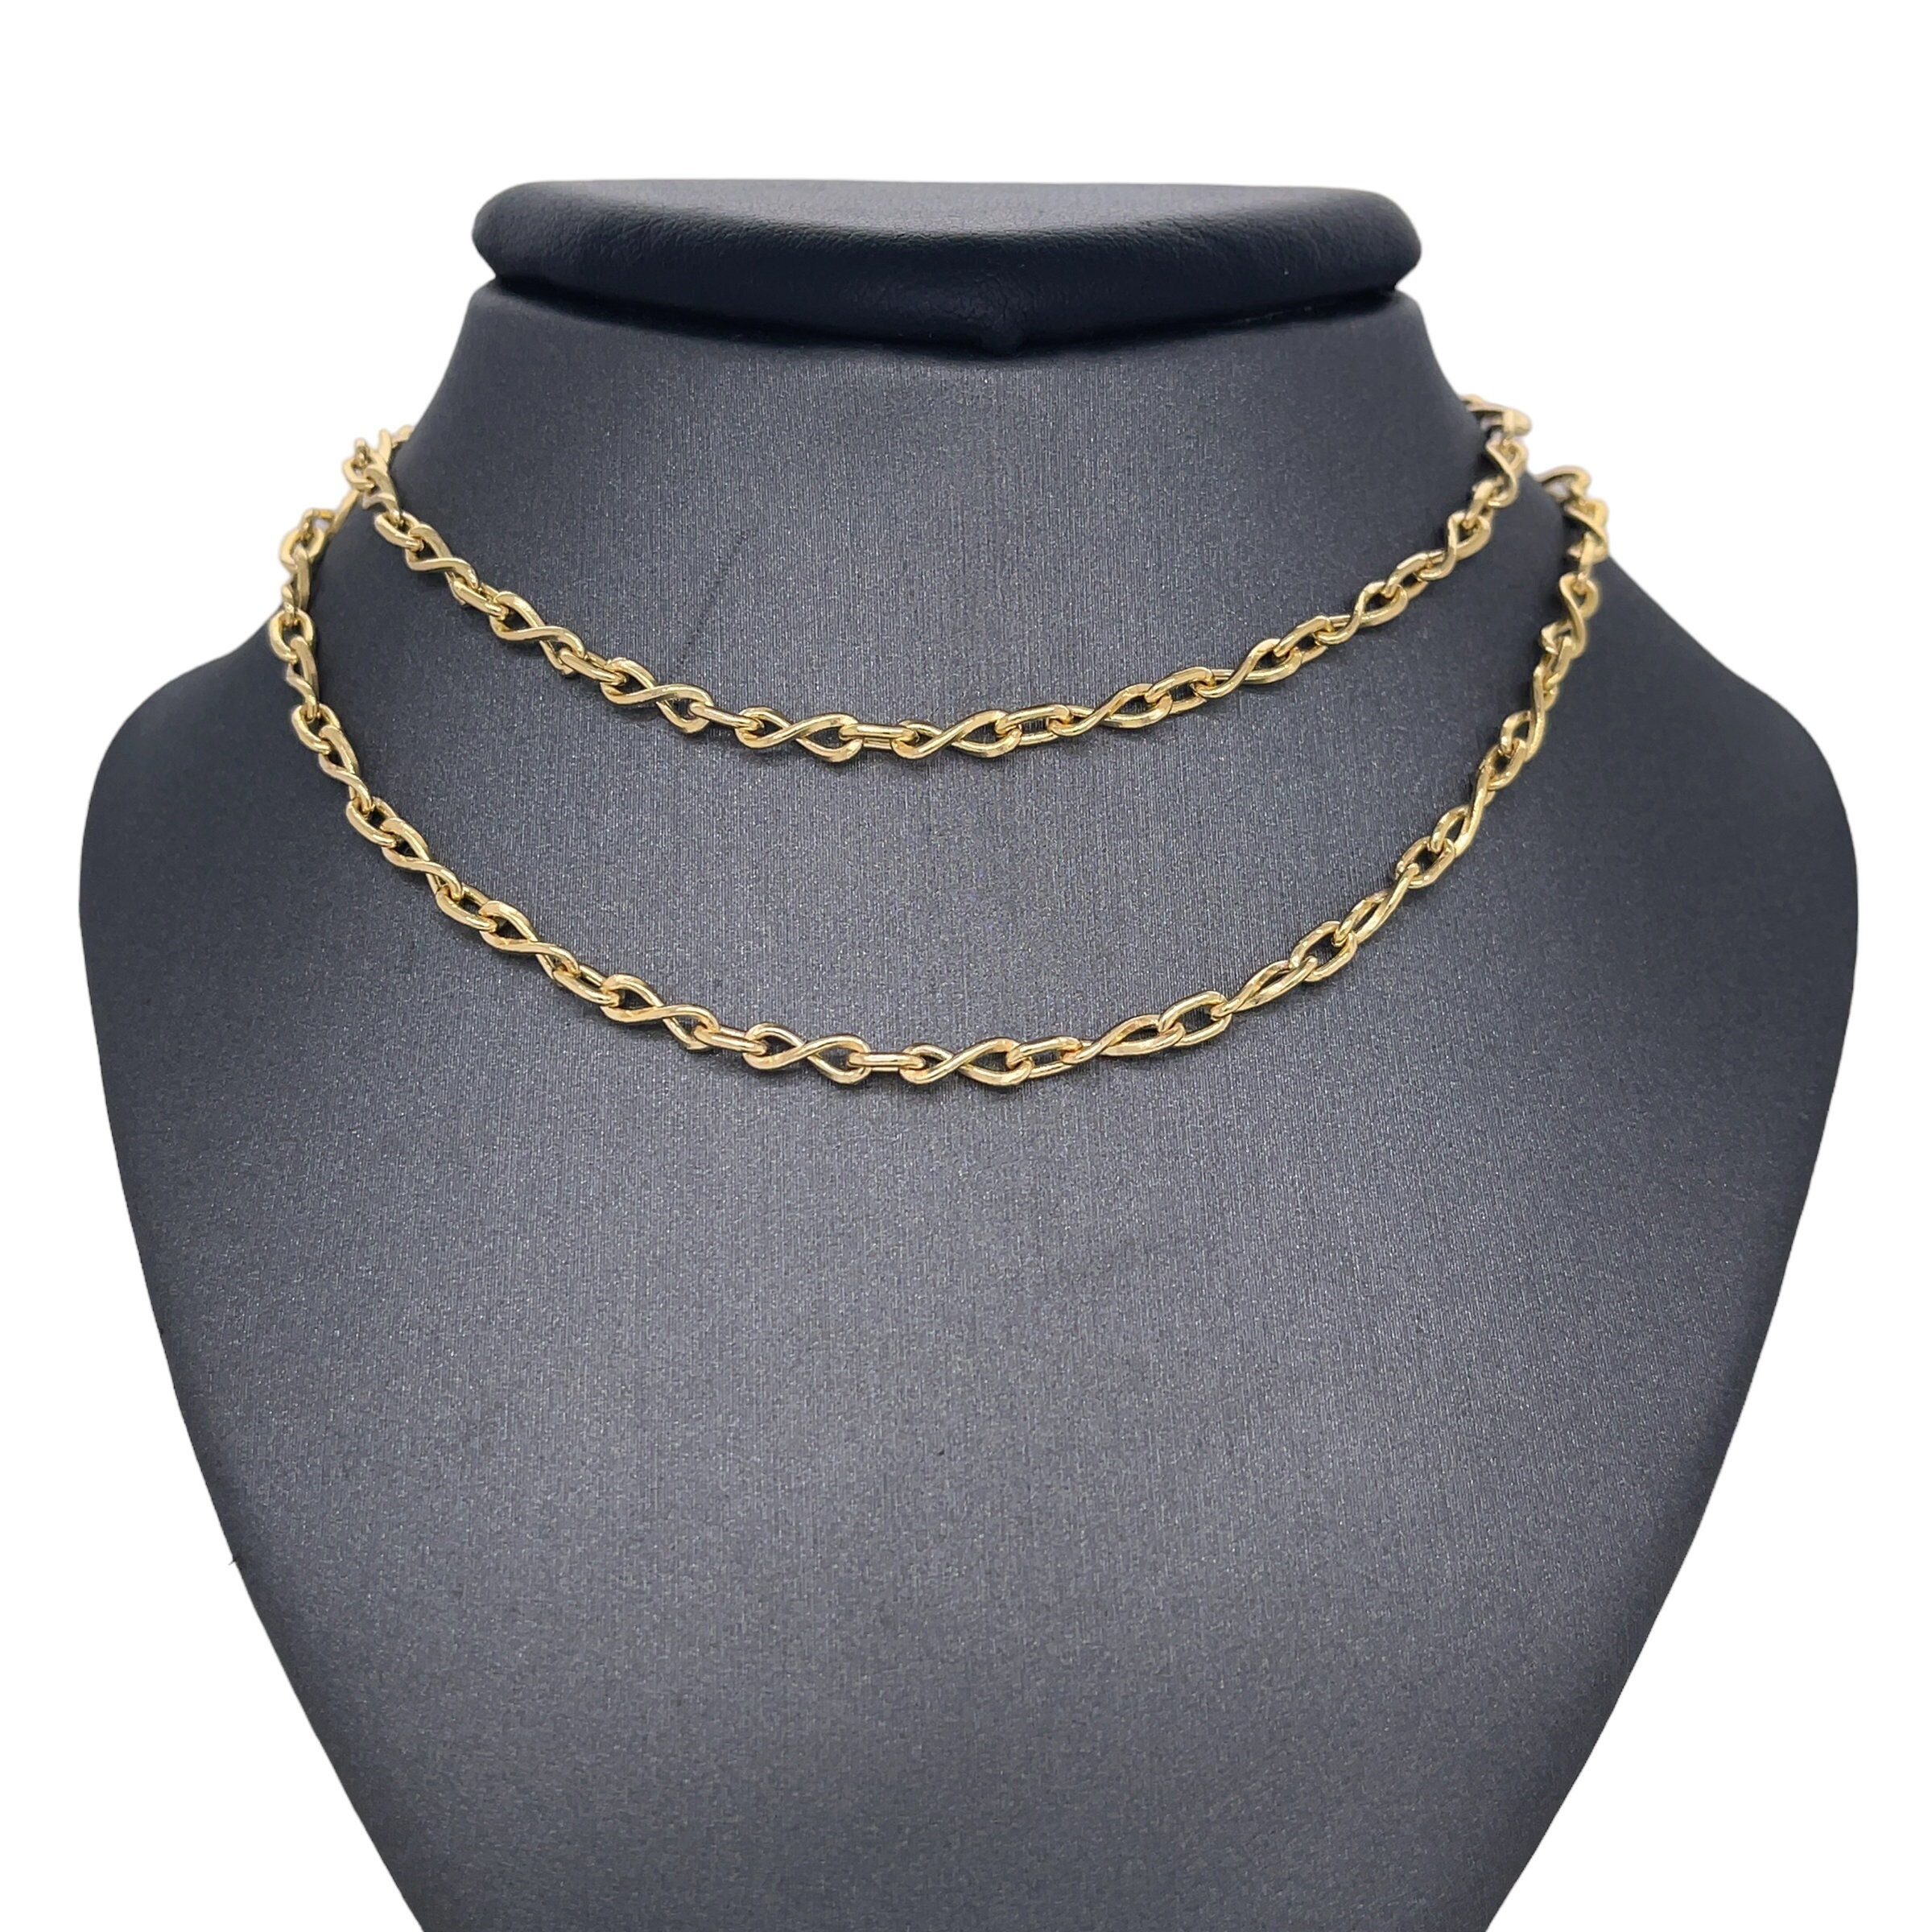 Infinity Clips- Necklace Shortener, Large Gold w/ Security Clasp, Chain Shortener, Clasp for Necklace, Necklace Shorten